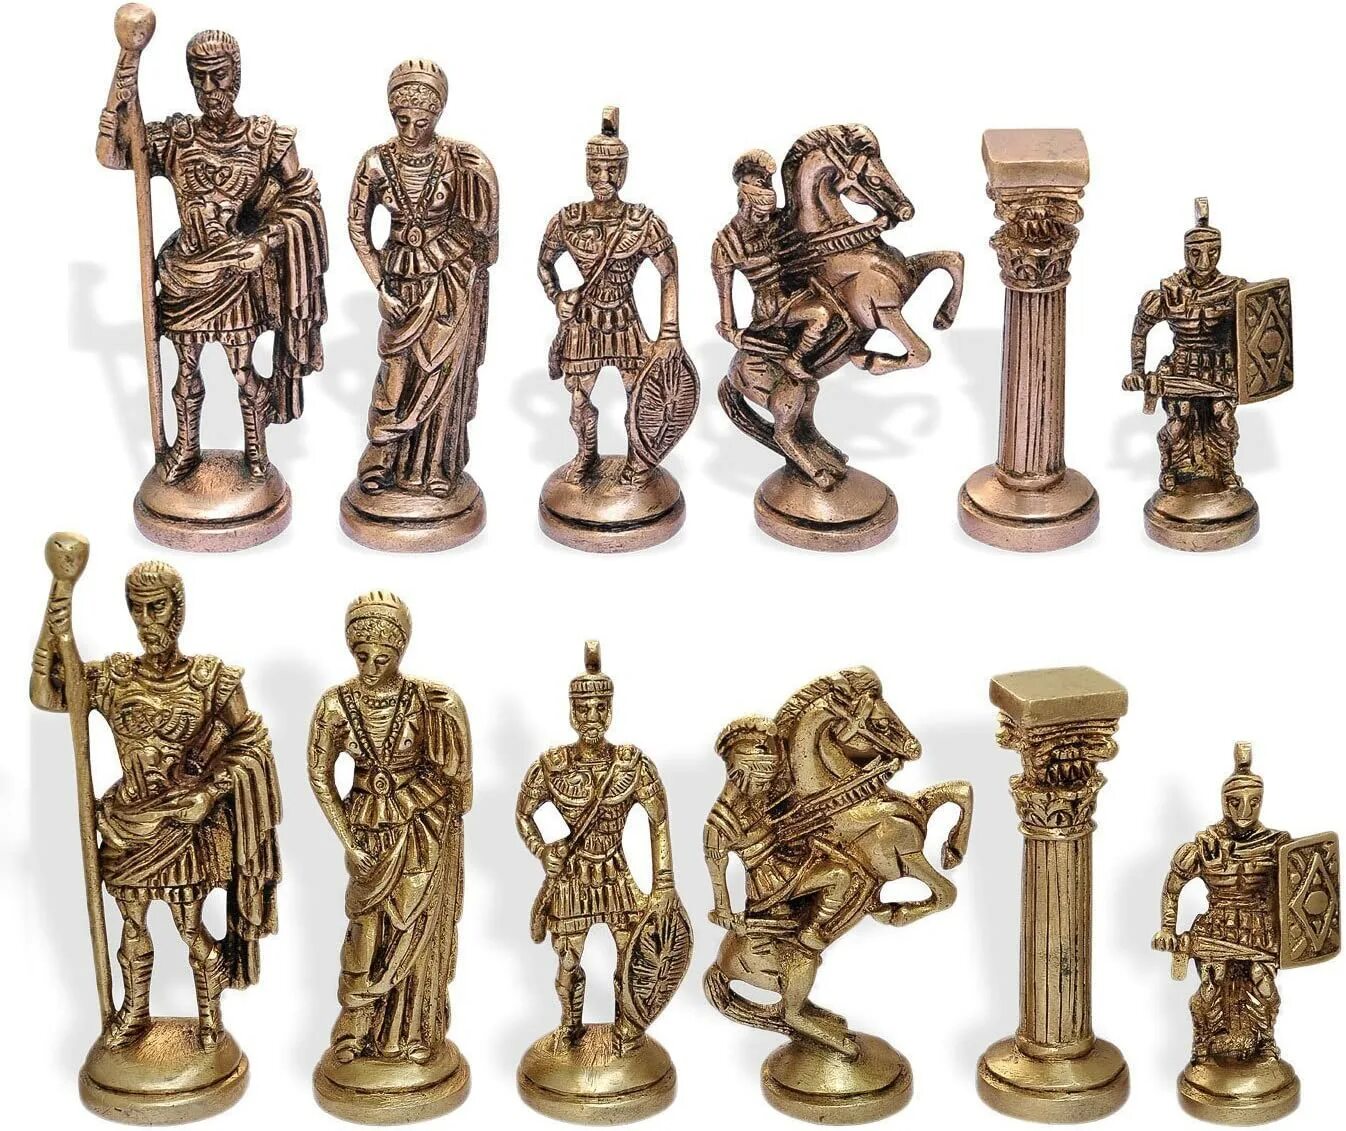 Купить старые фигурки. Шахматные фигуры из латуни. Фигурки из бронзы. Статуэтки шахматные фигуры. Латунные шахматные фигурки.